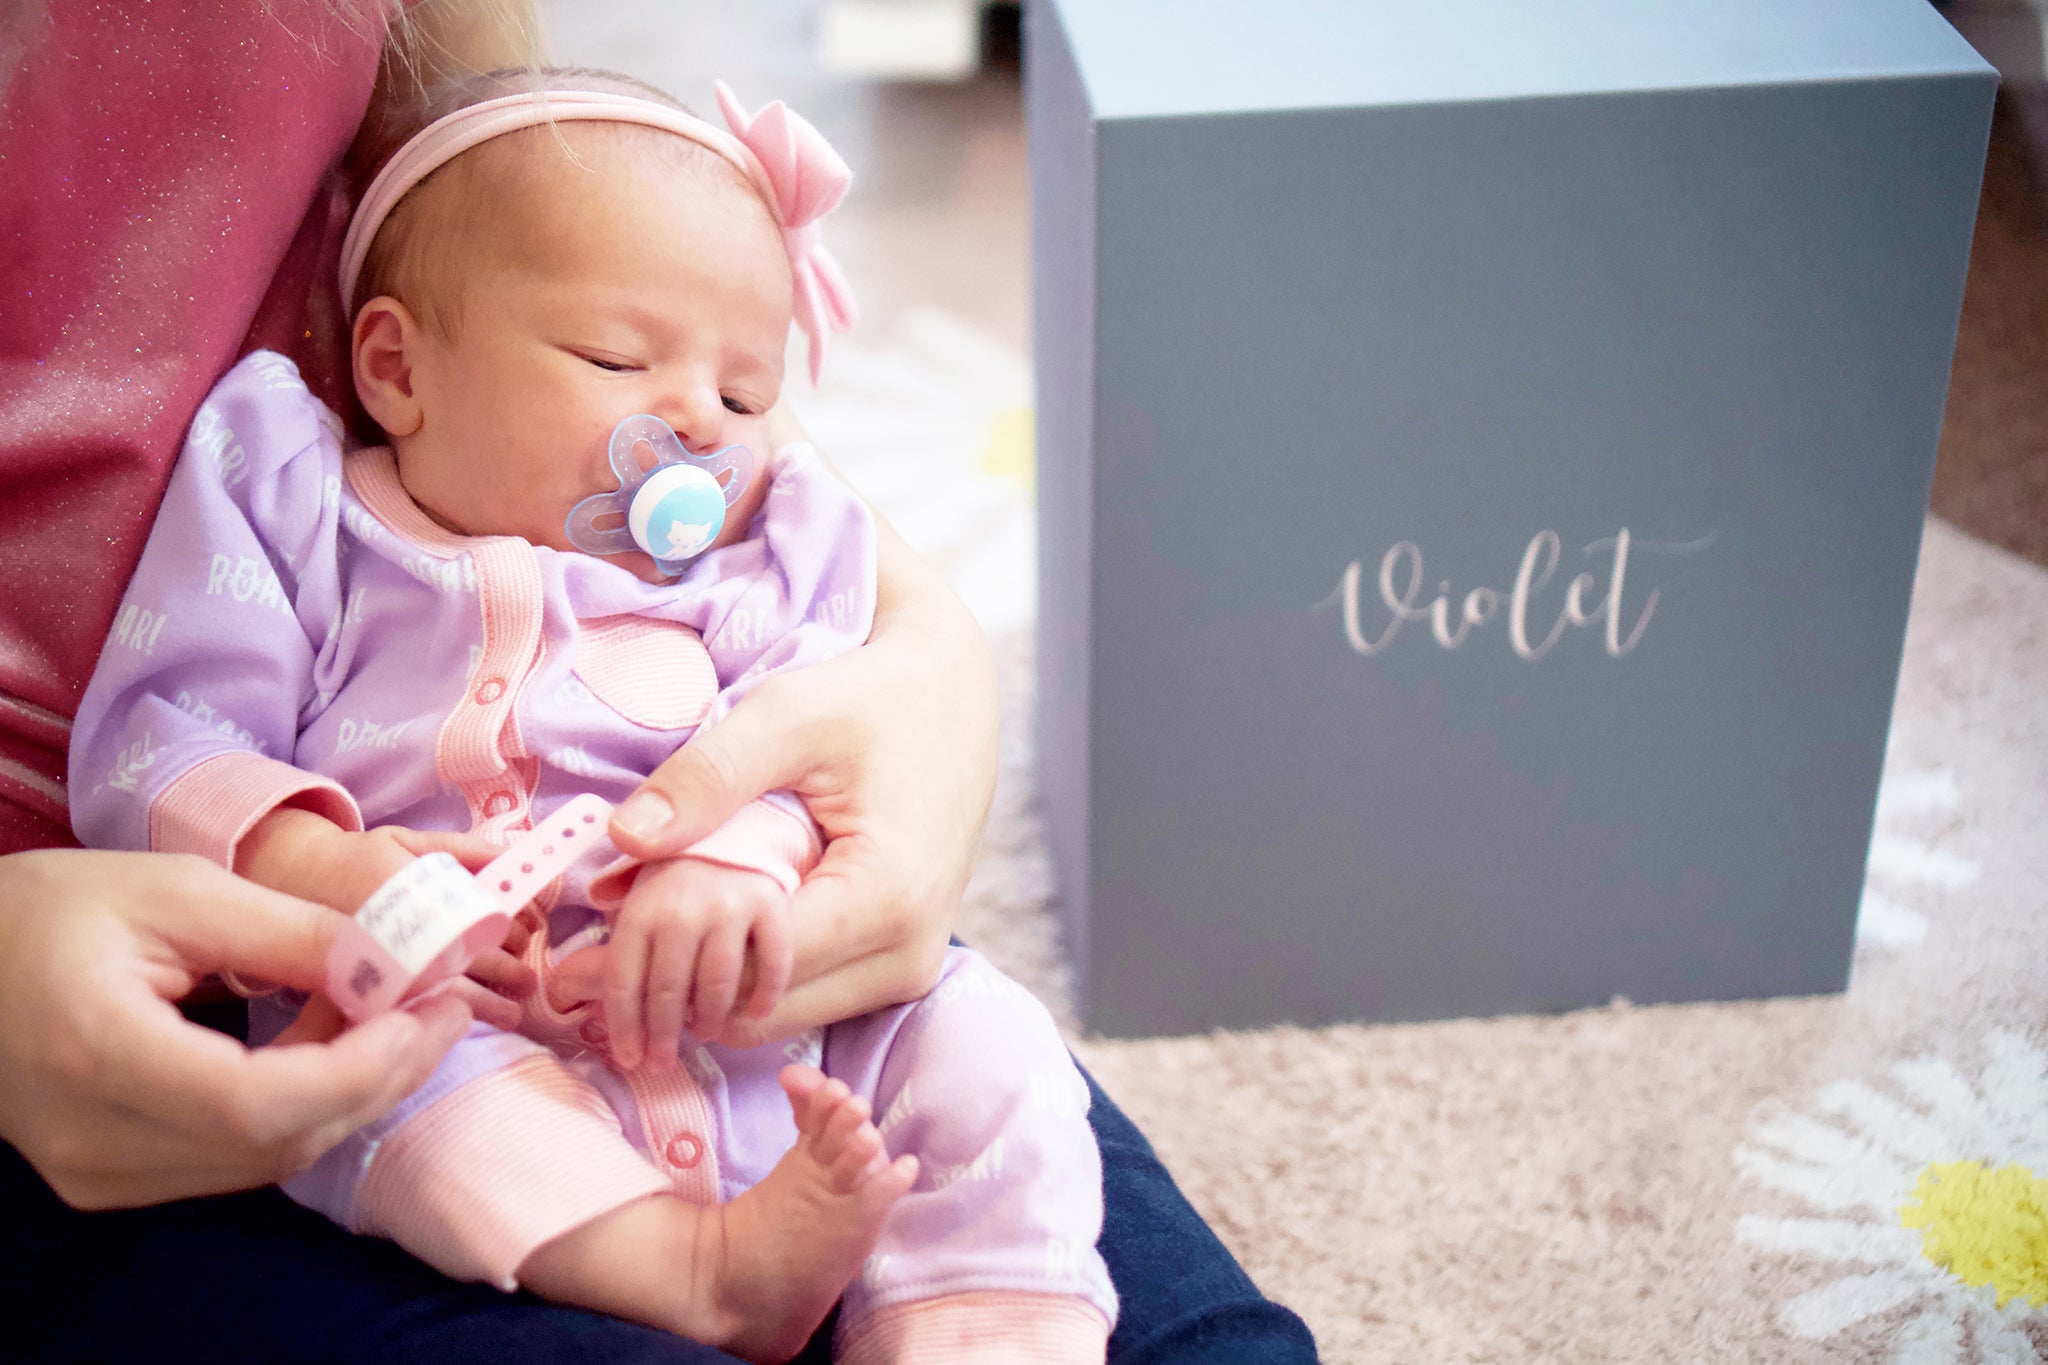 Newborn with bracelet and baby keepsake box saying Violet